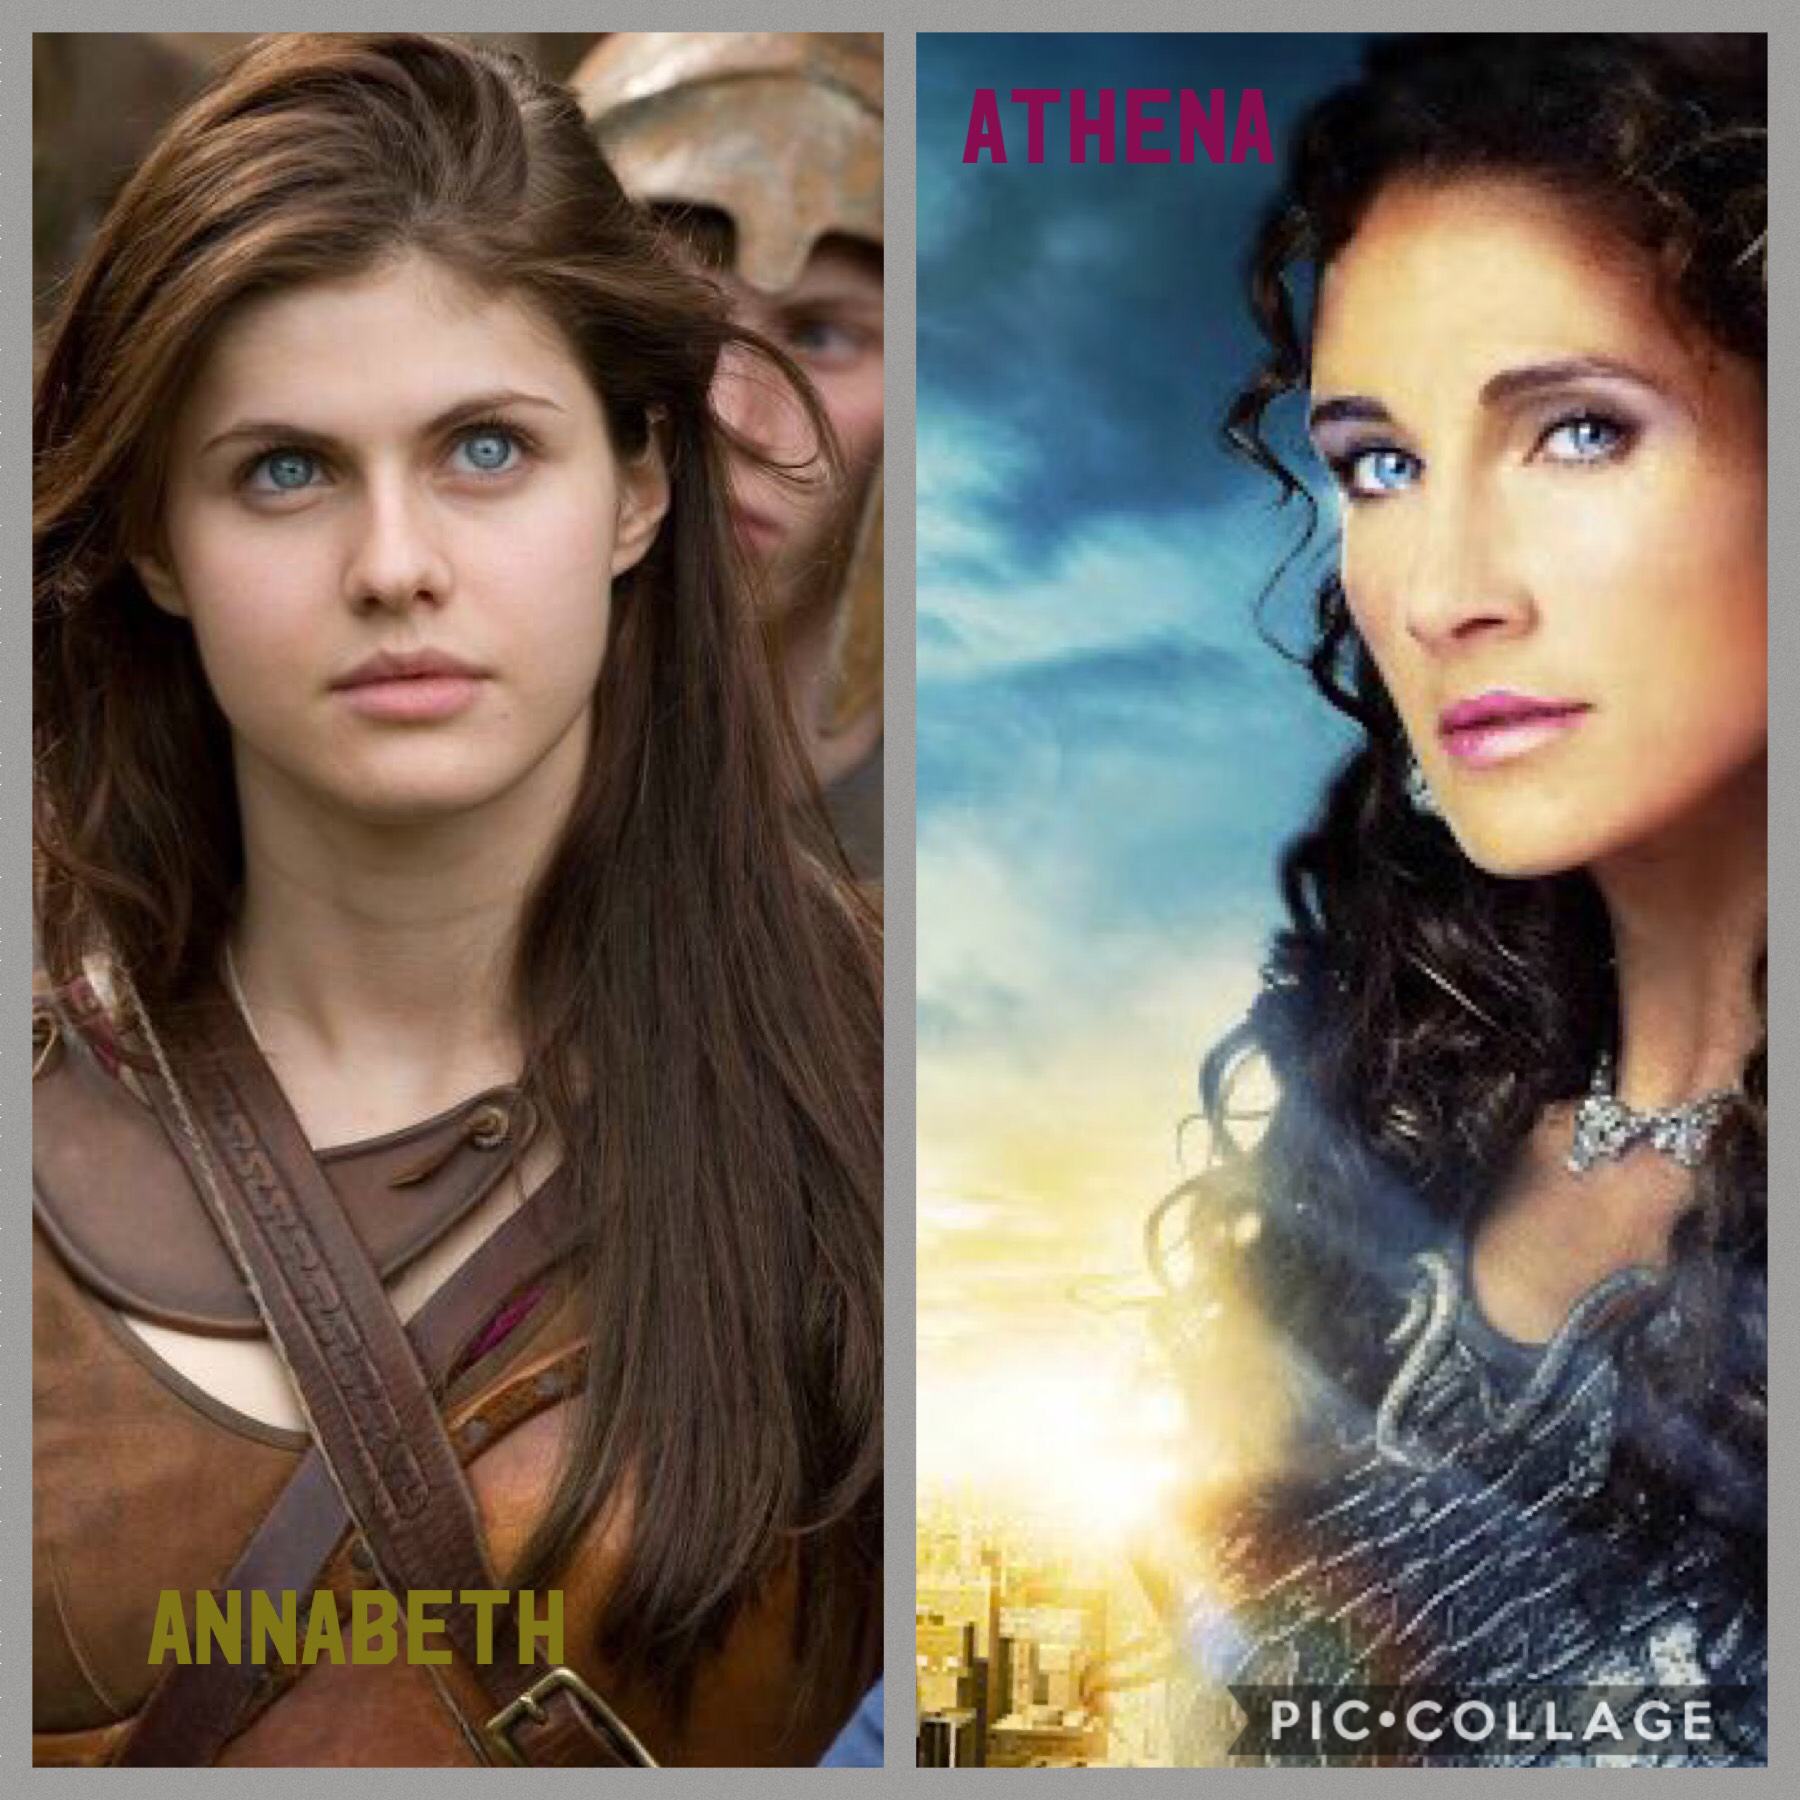 Annabeth daughter of the goddes of wisdom Athena 